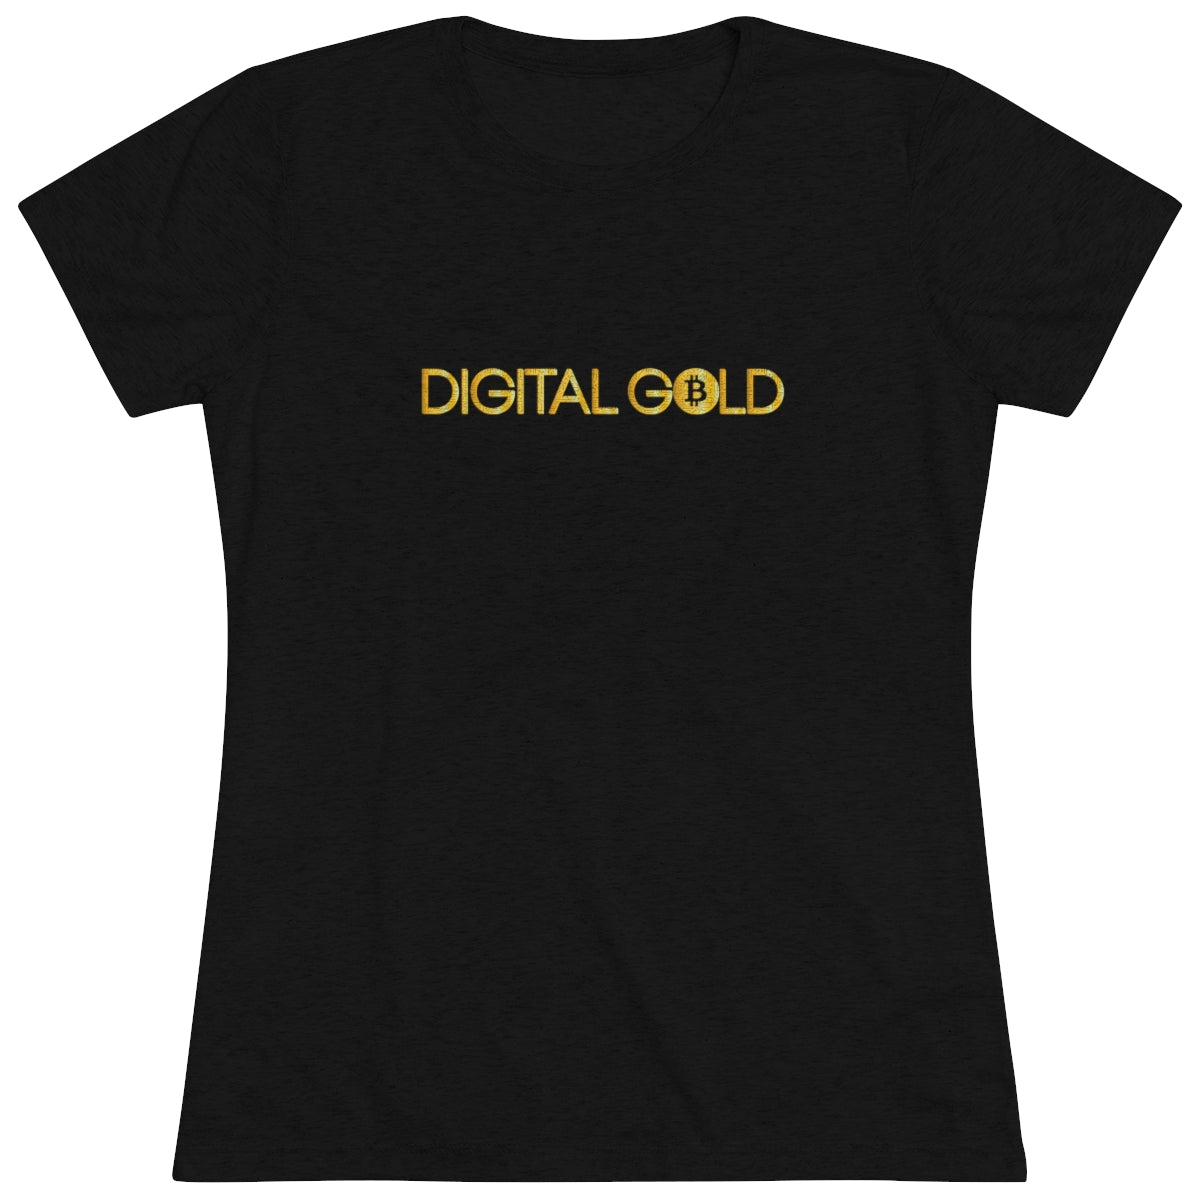 Digital Gold Women's Tee